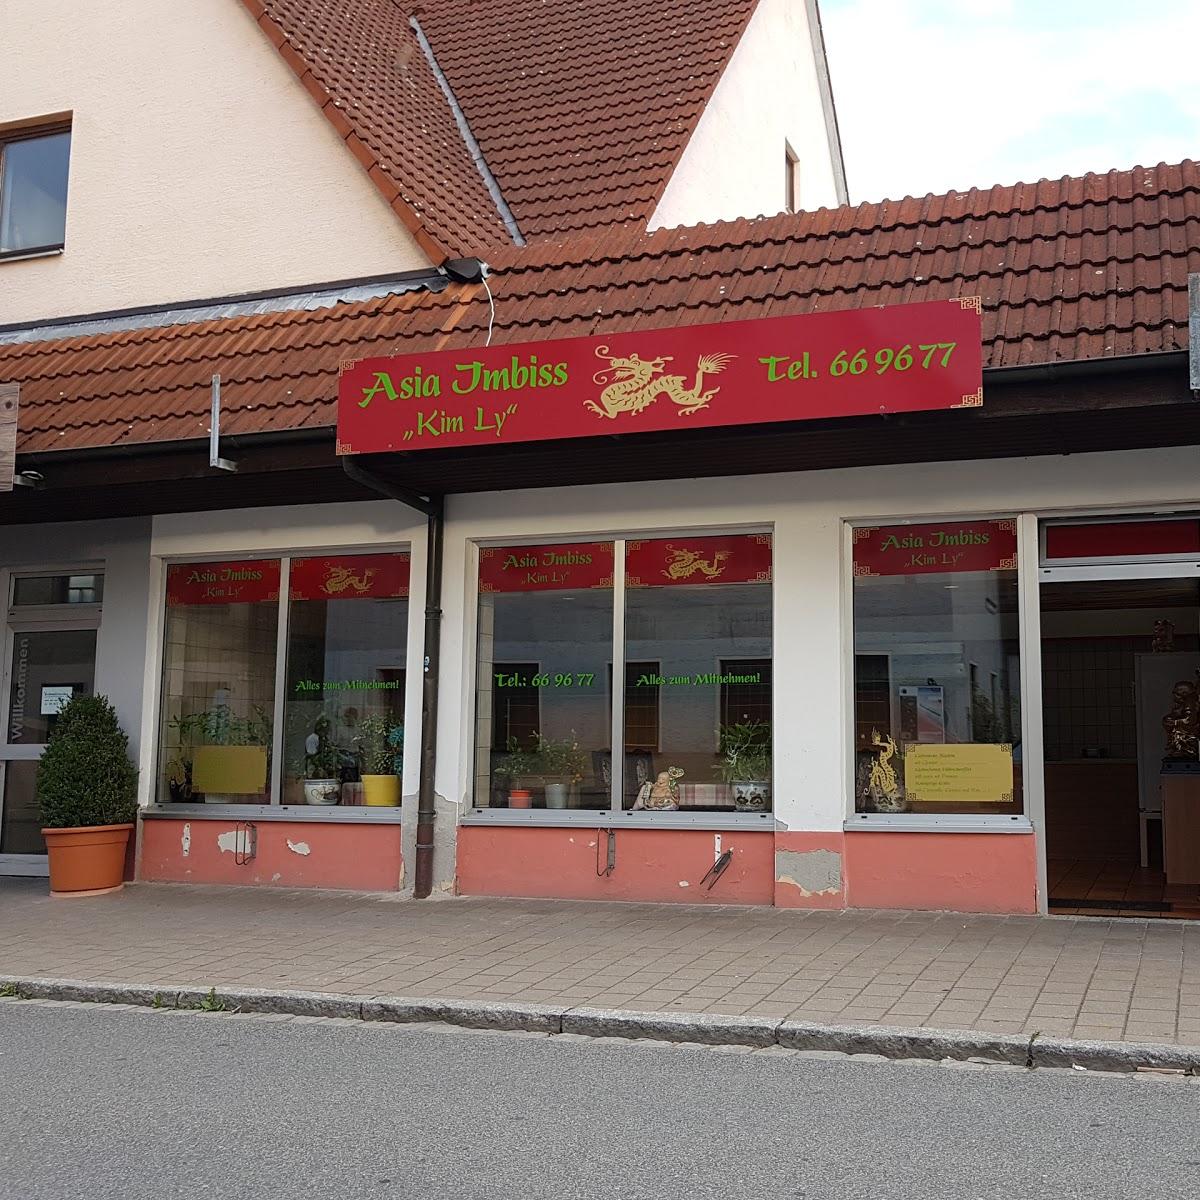 Restaurant "Asia Imbiss Kim Ly" in Georgensgmünd